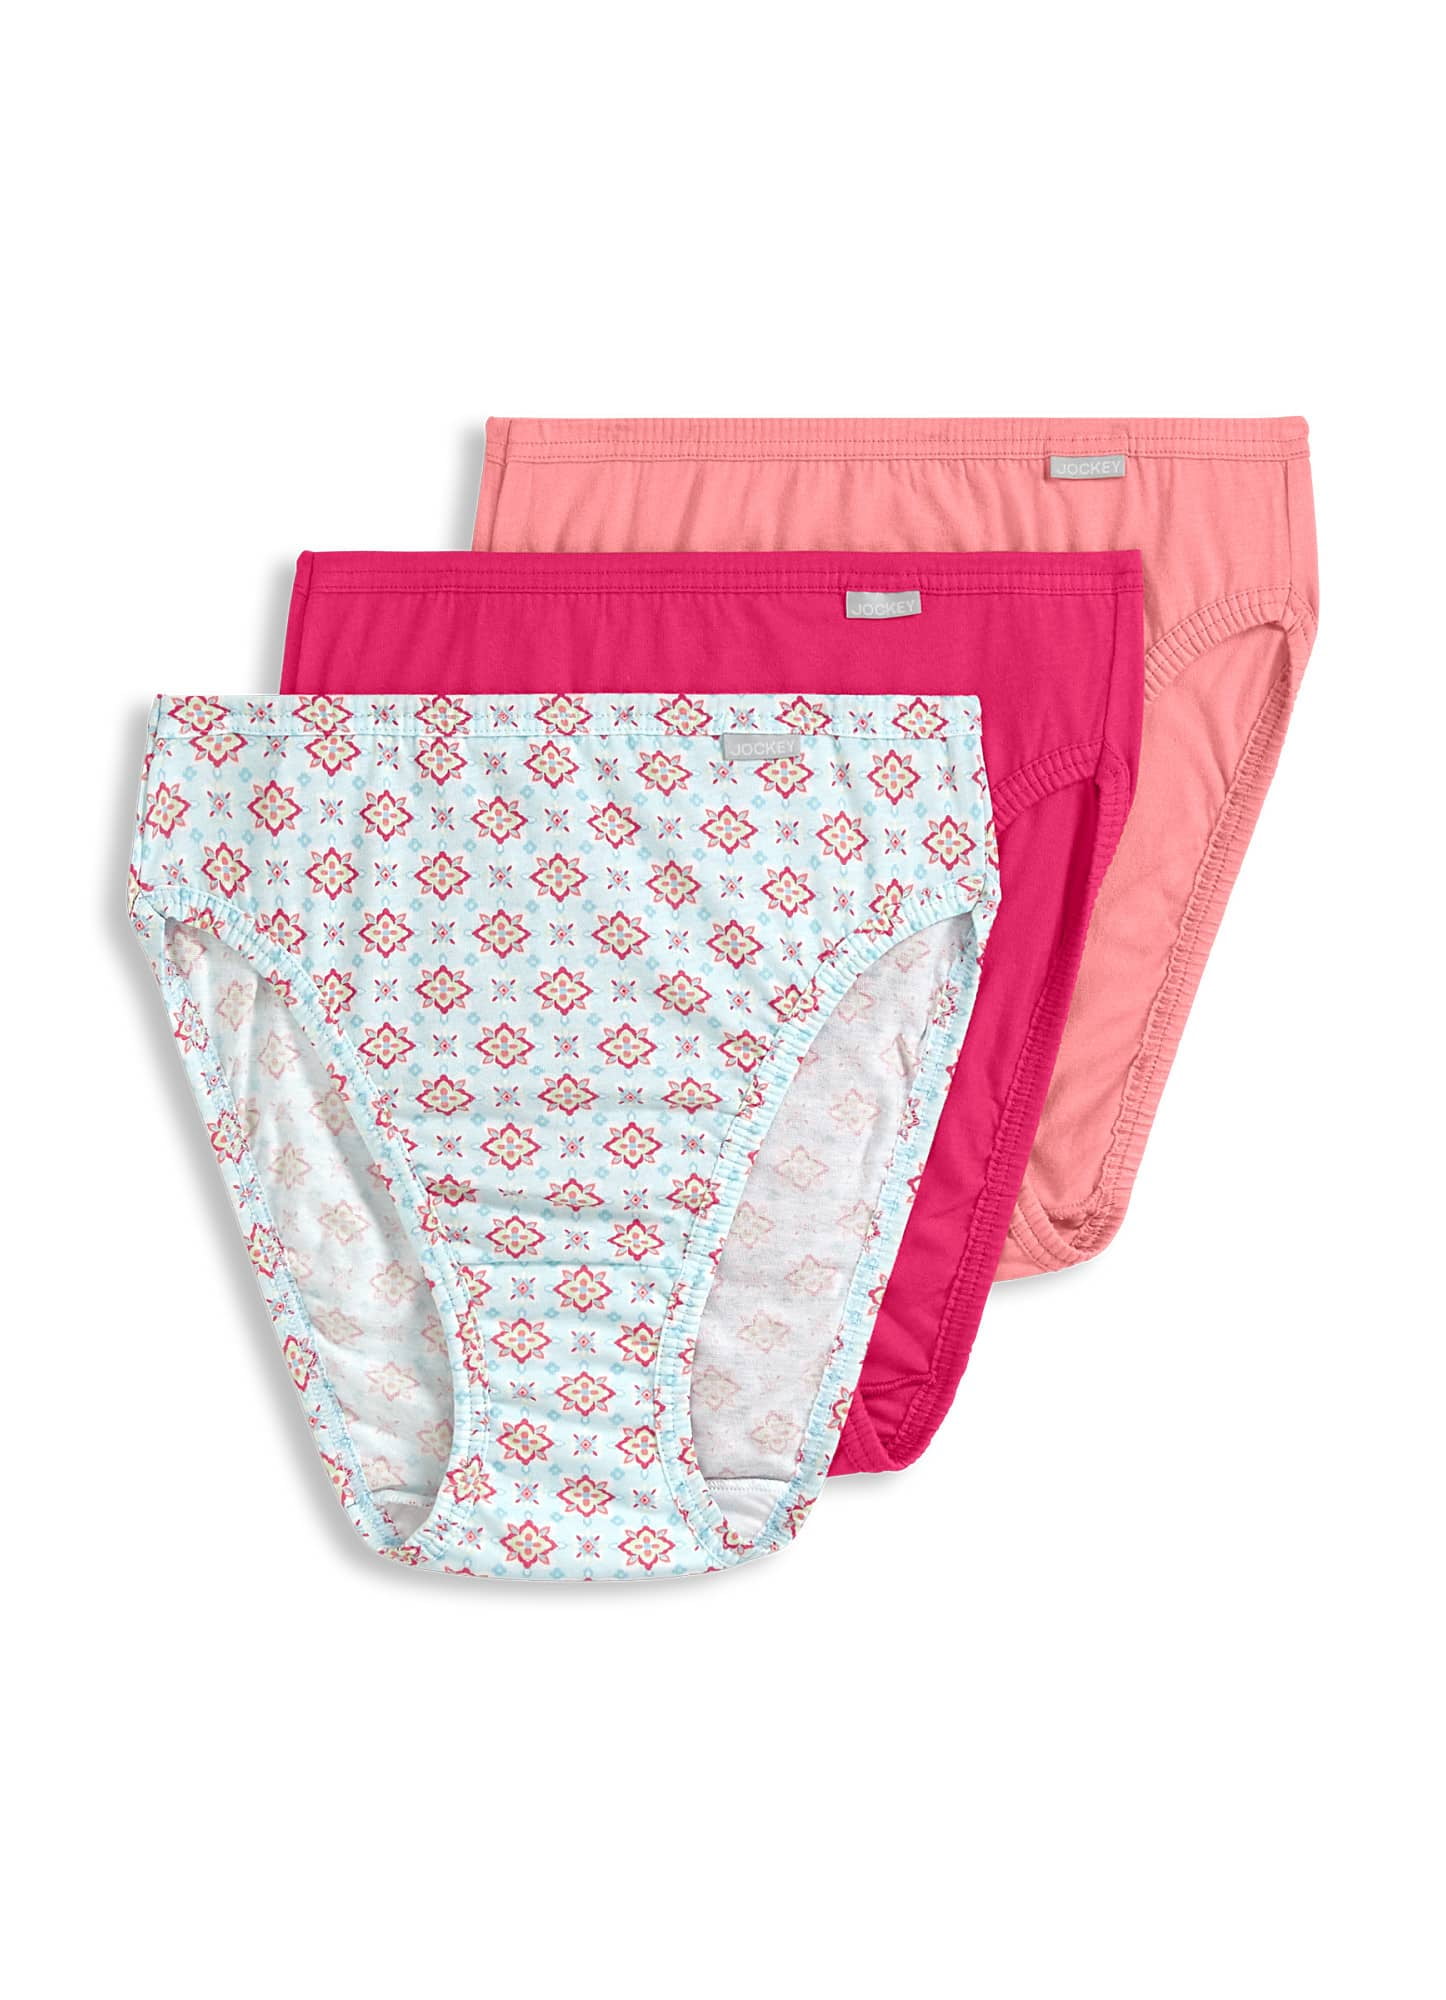 Jockey - Jockey Girls Underwear Bulk Buy-size 10-12 on Designer Wardrobe